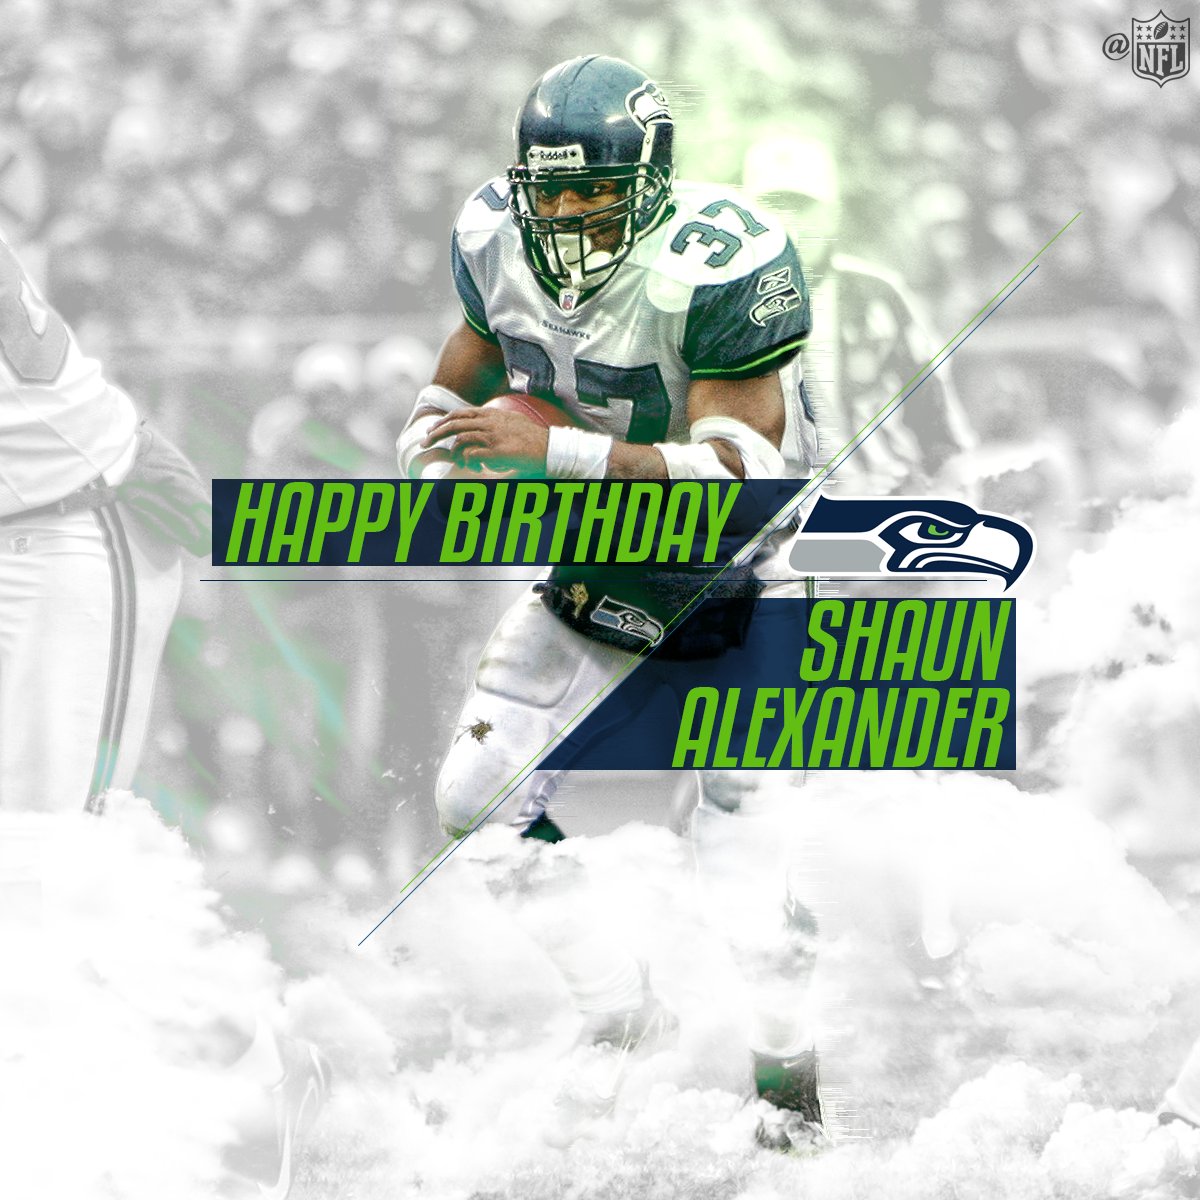 Seattle Seahawks - Let's wish Seahawks Legend Shaun Alexander a happy  birthday! 